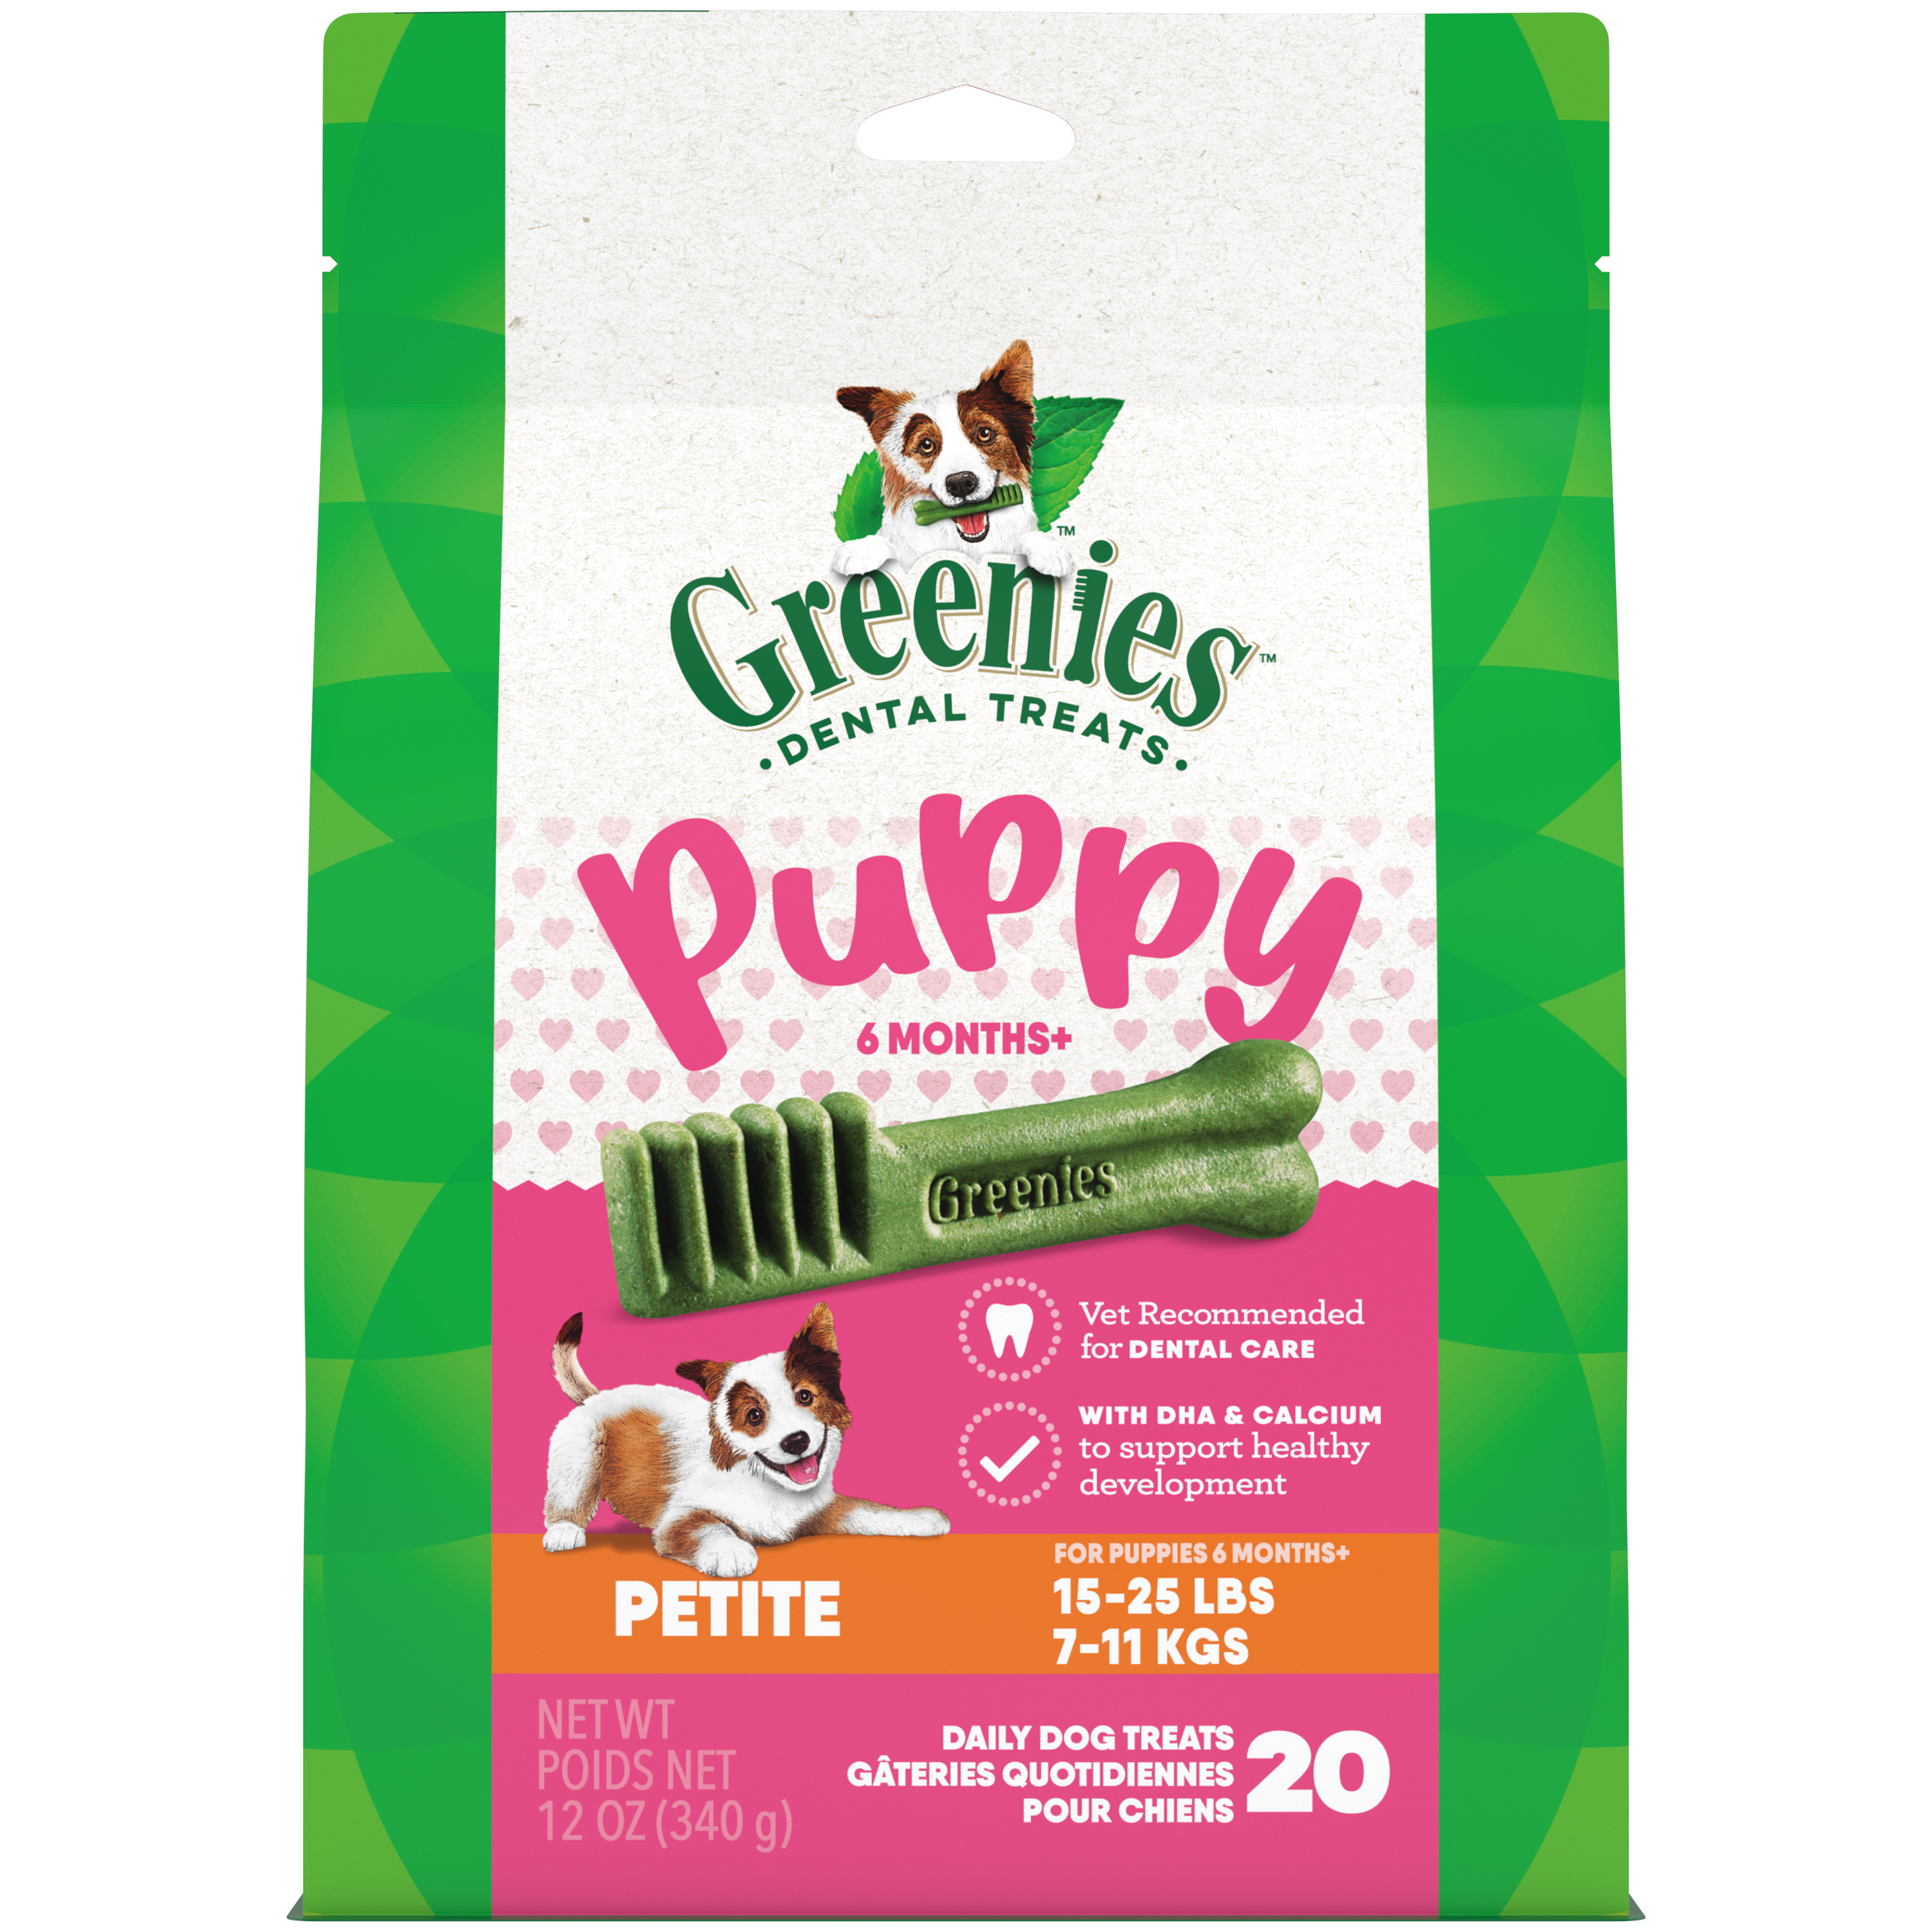 12oz Greenies PUPPY Petite Treat Pack - Health/First Aid